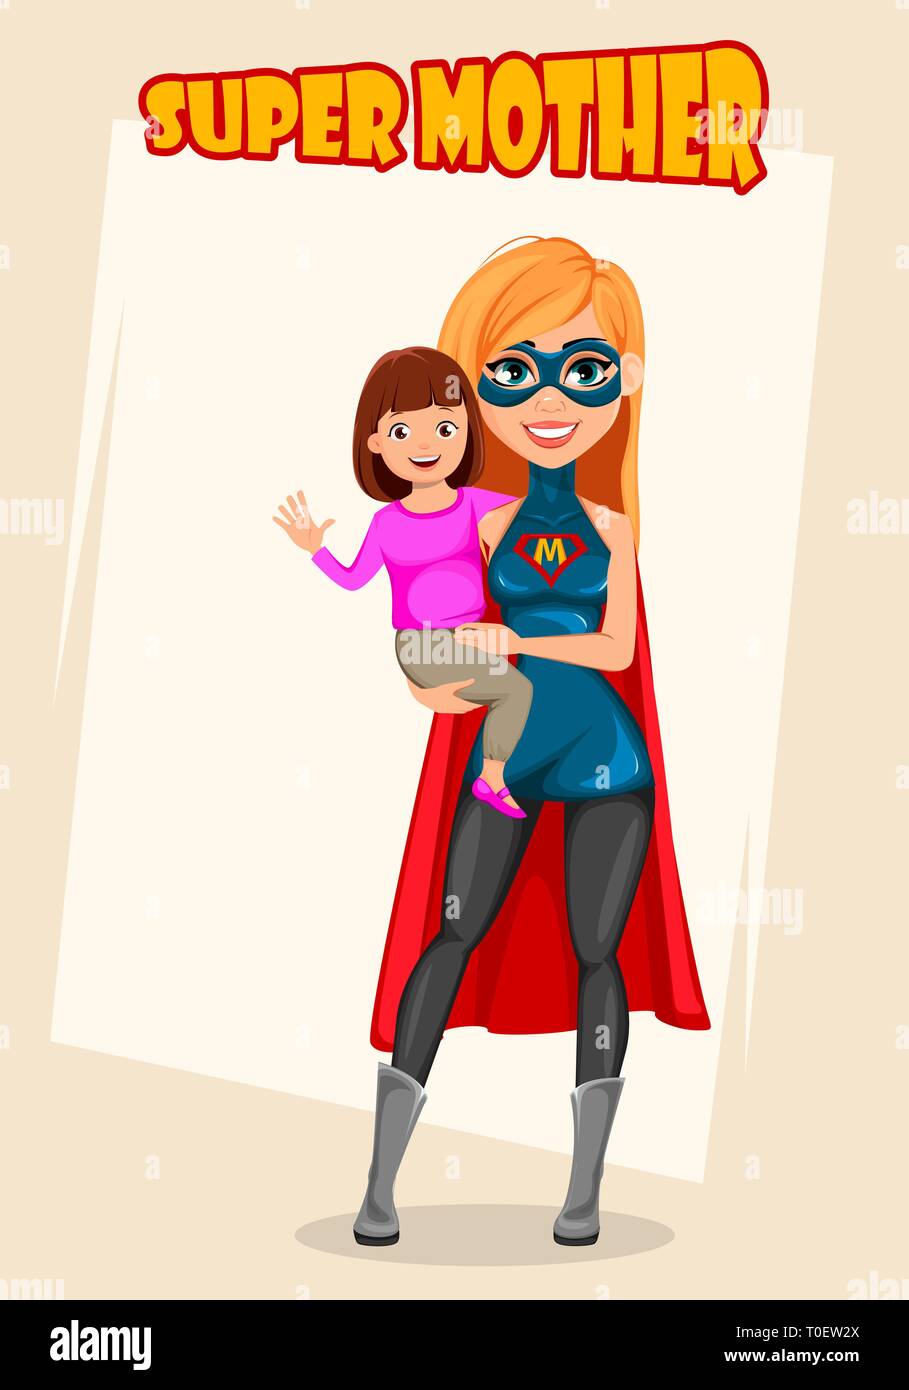 Super mother woman superhero. Concept of woman wearing superhero costume. Cartoon character holding her daughter. Vector illustration Stock Vector